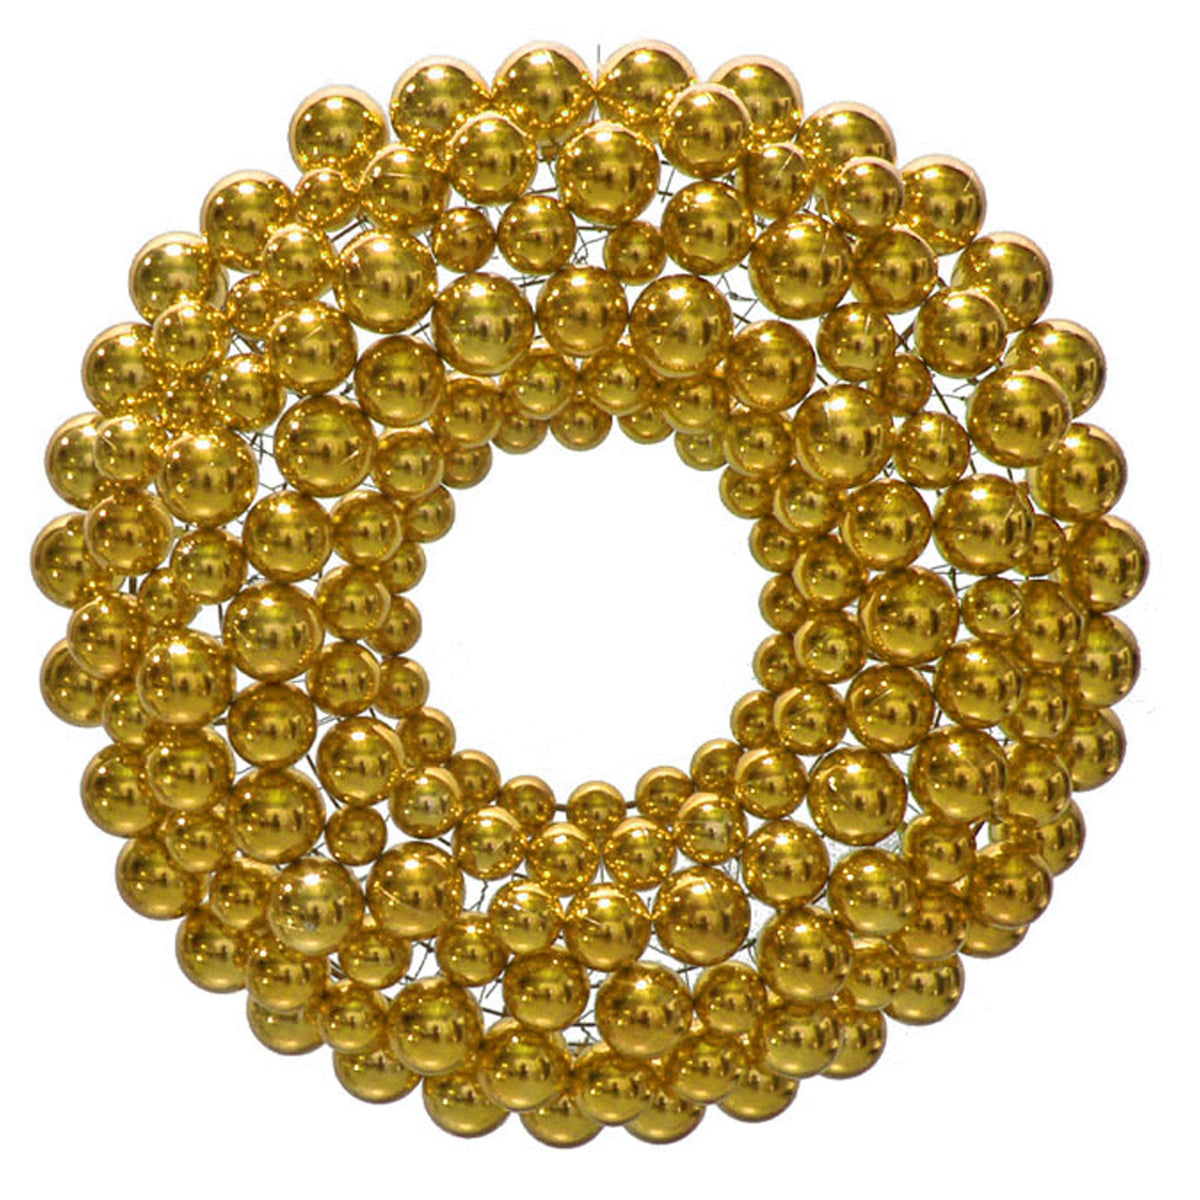 Gold Ball Ornament Wreath